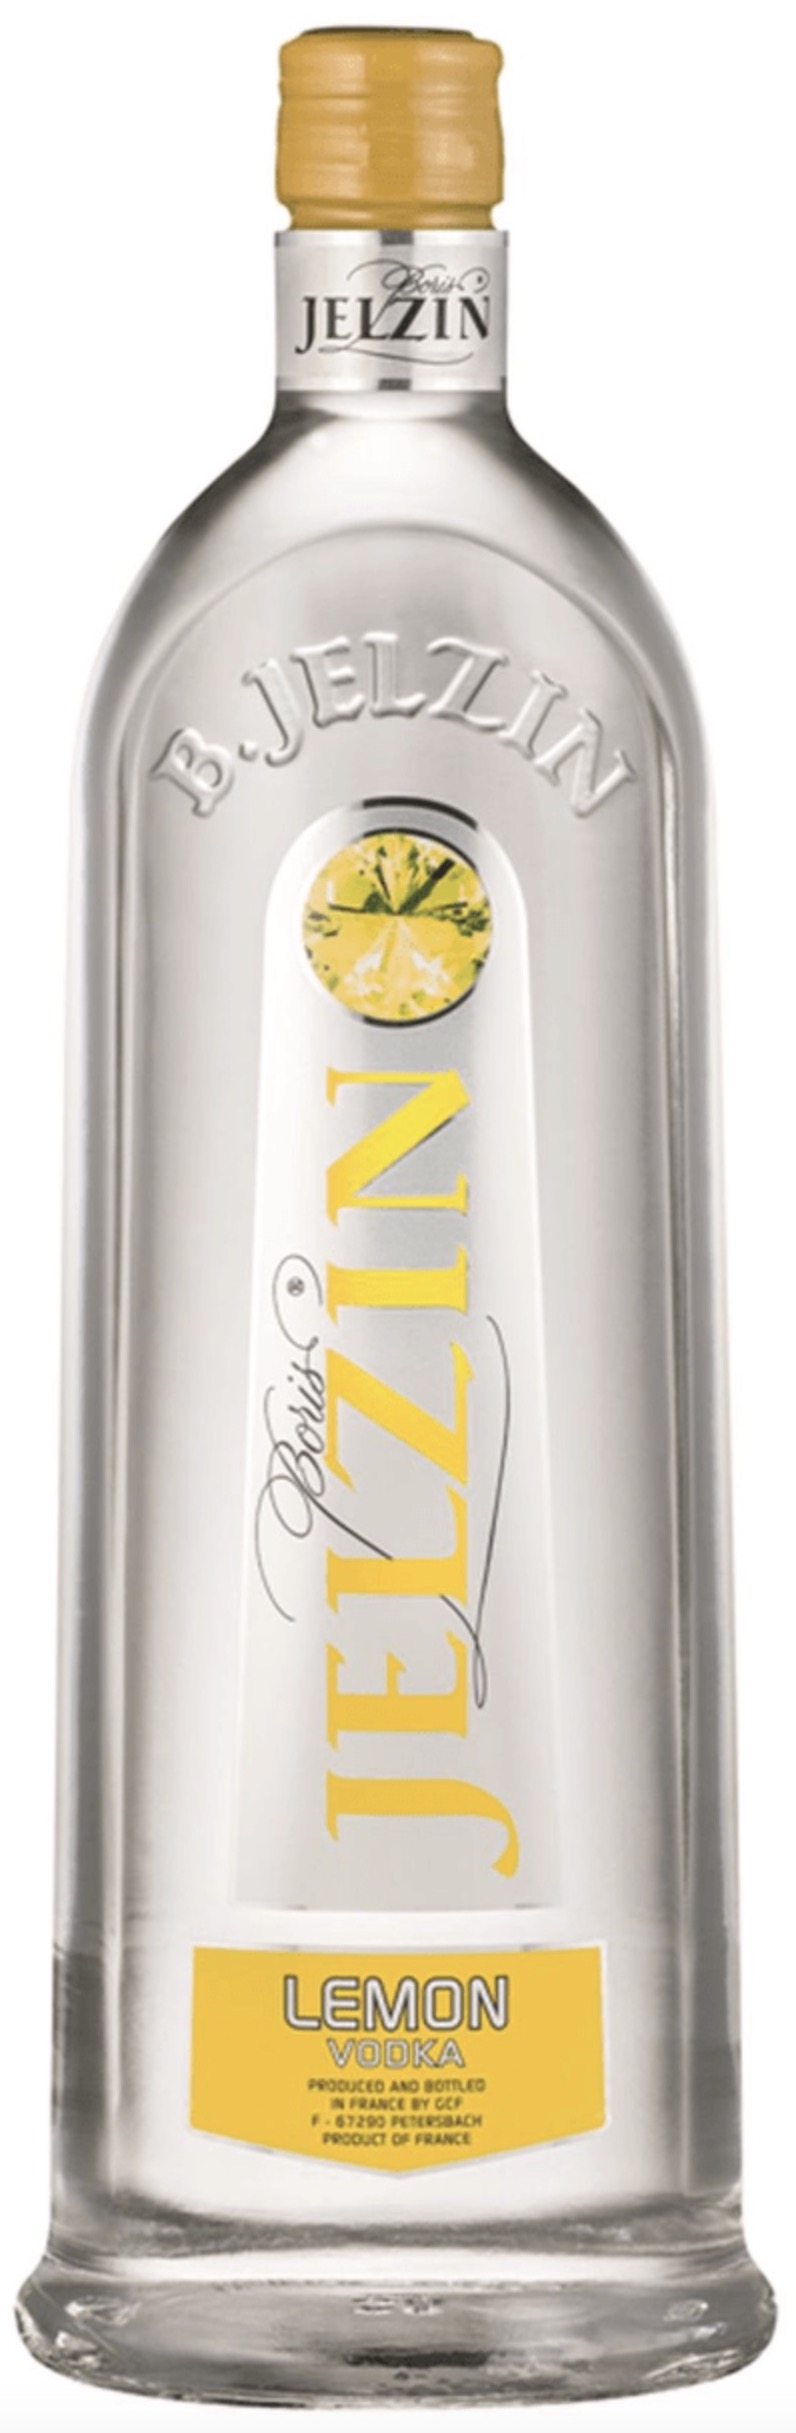 Jelzin Lemon Vodka 37,5% vol. 0,7L